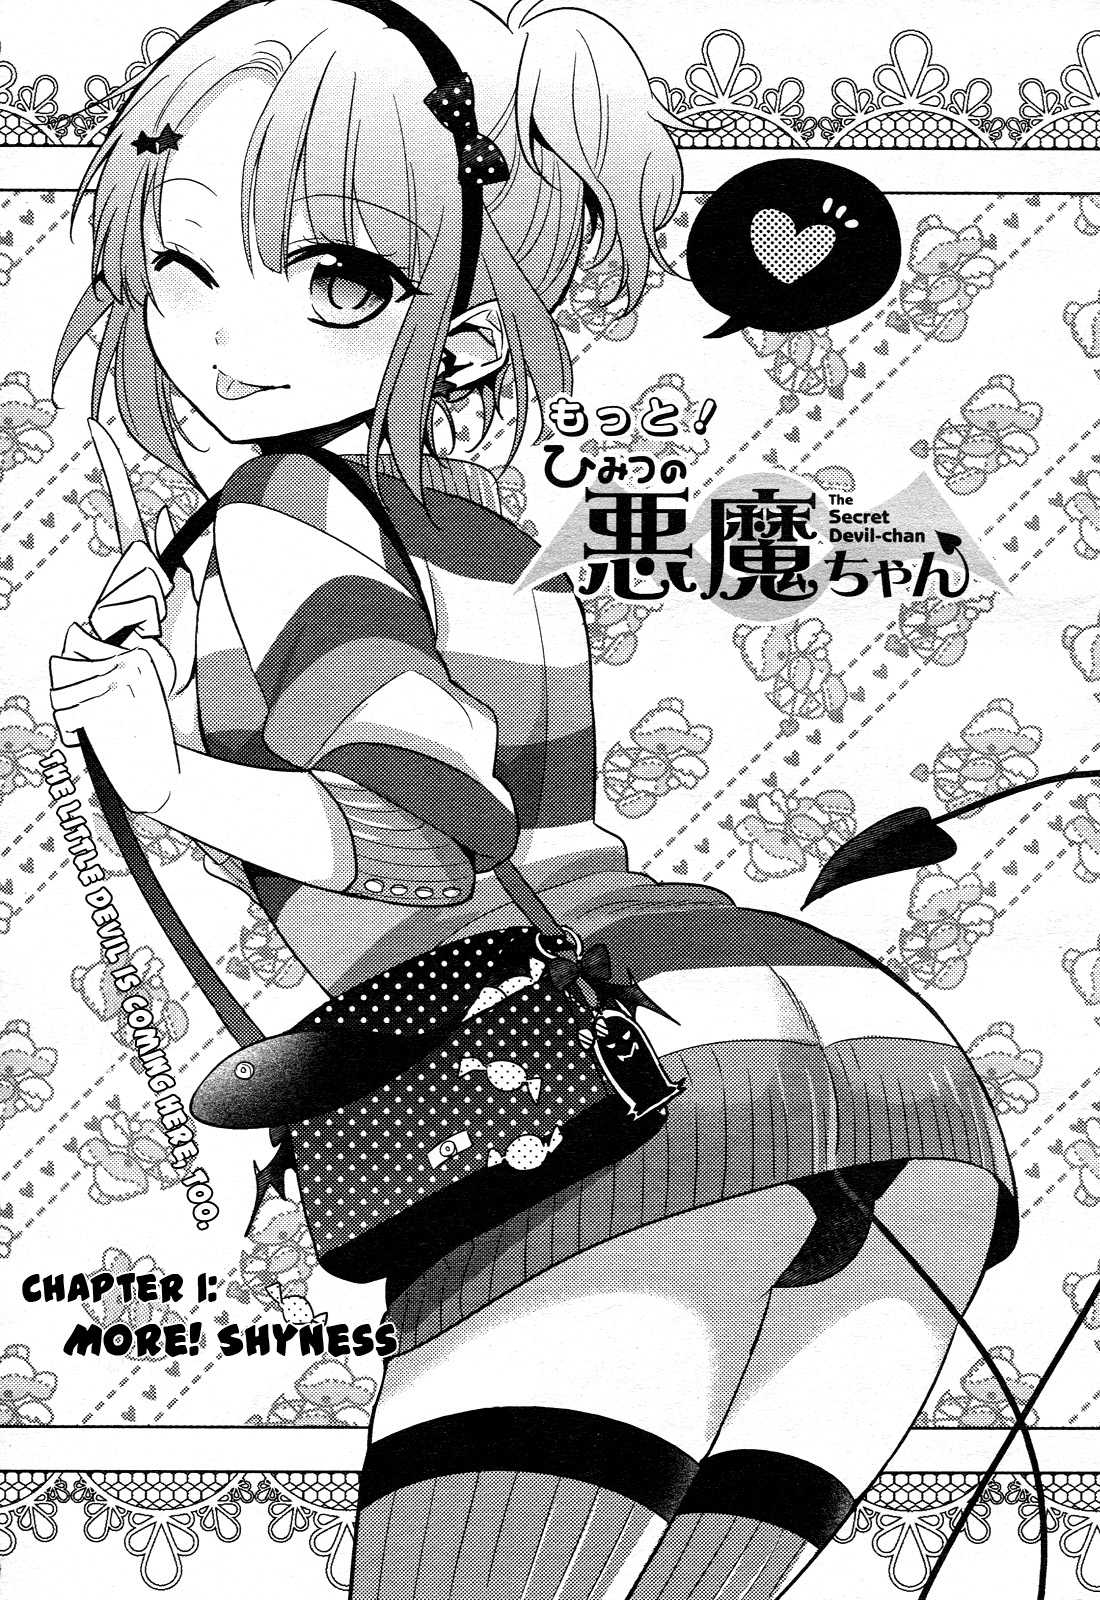 More! The Secret Devil-chan Chapter 1! もっと! ひみつの悪魔ちゃん